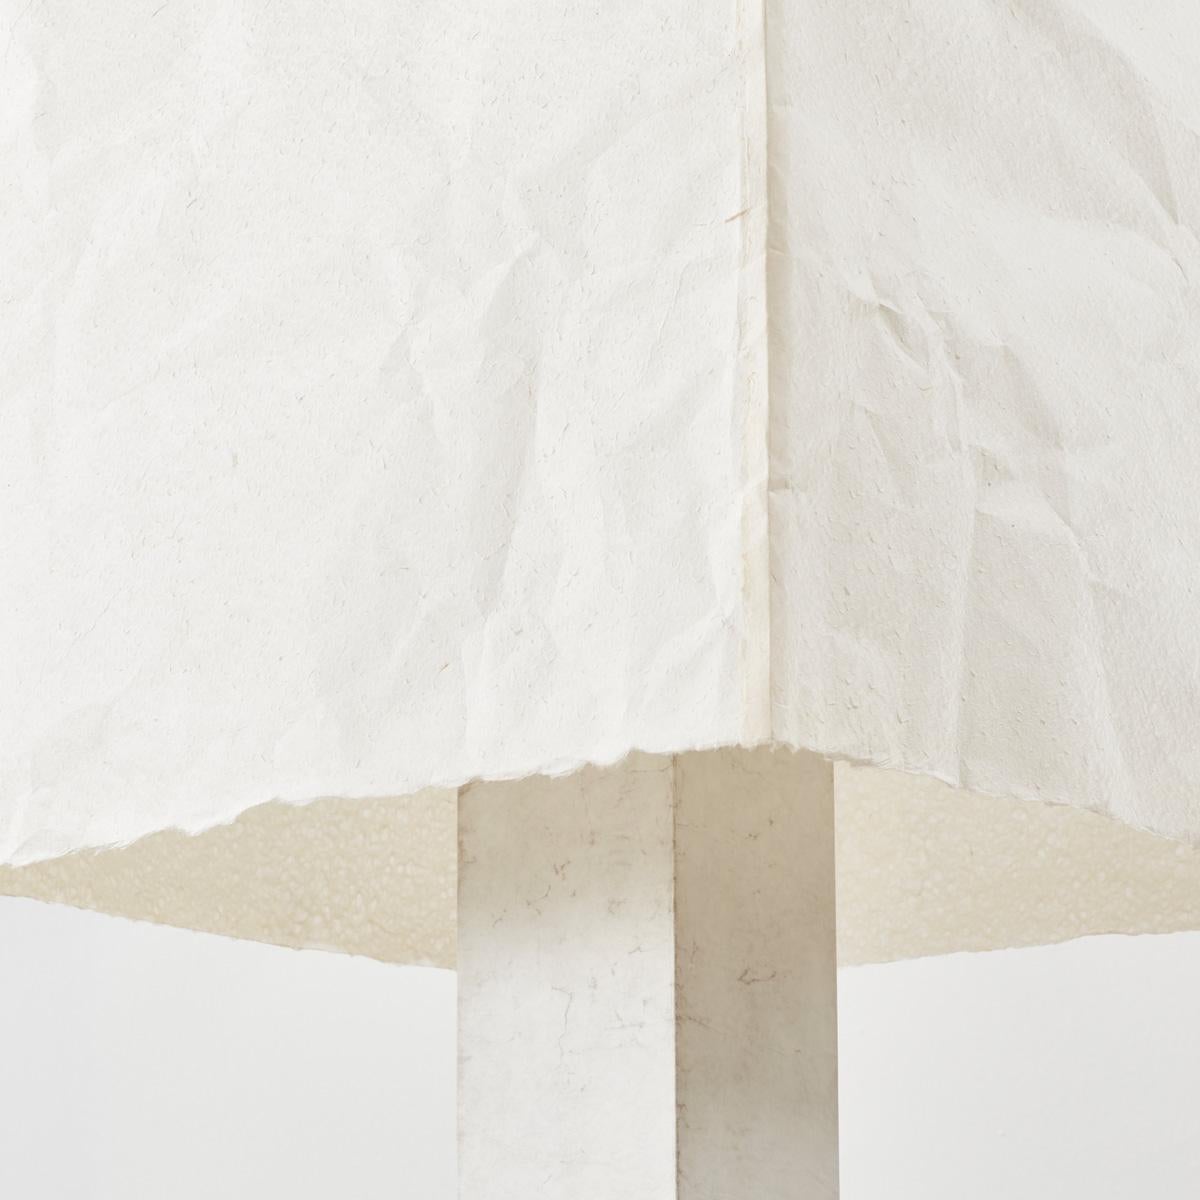 David Horan Paper floor light in semi-matte finish for Béton Brut, UK, 2022 For Sale 4